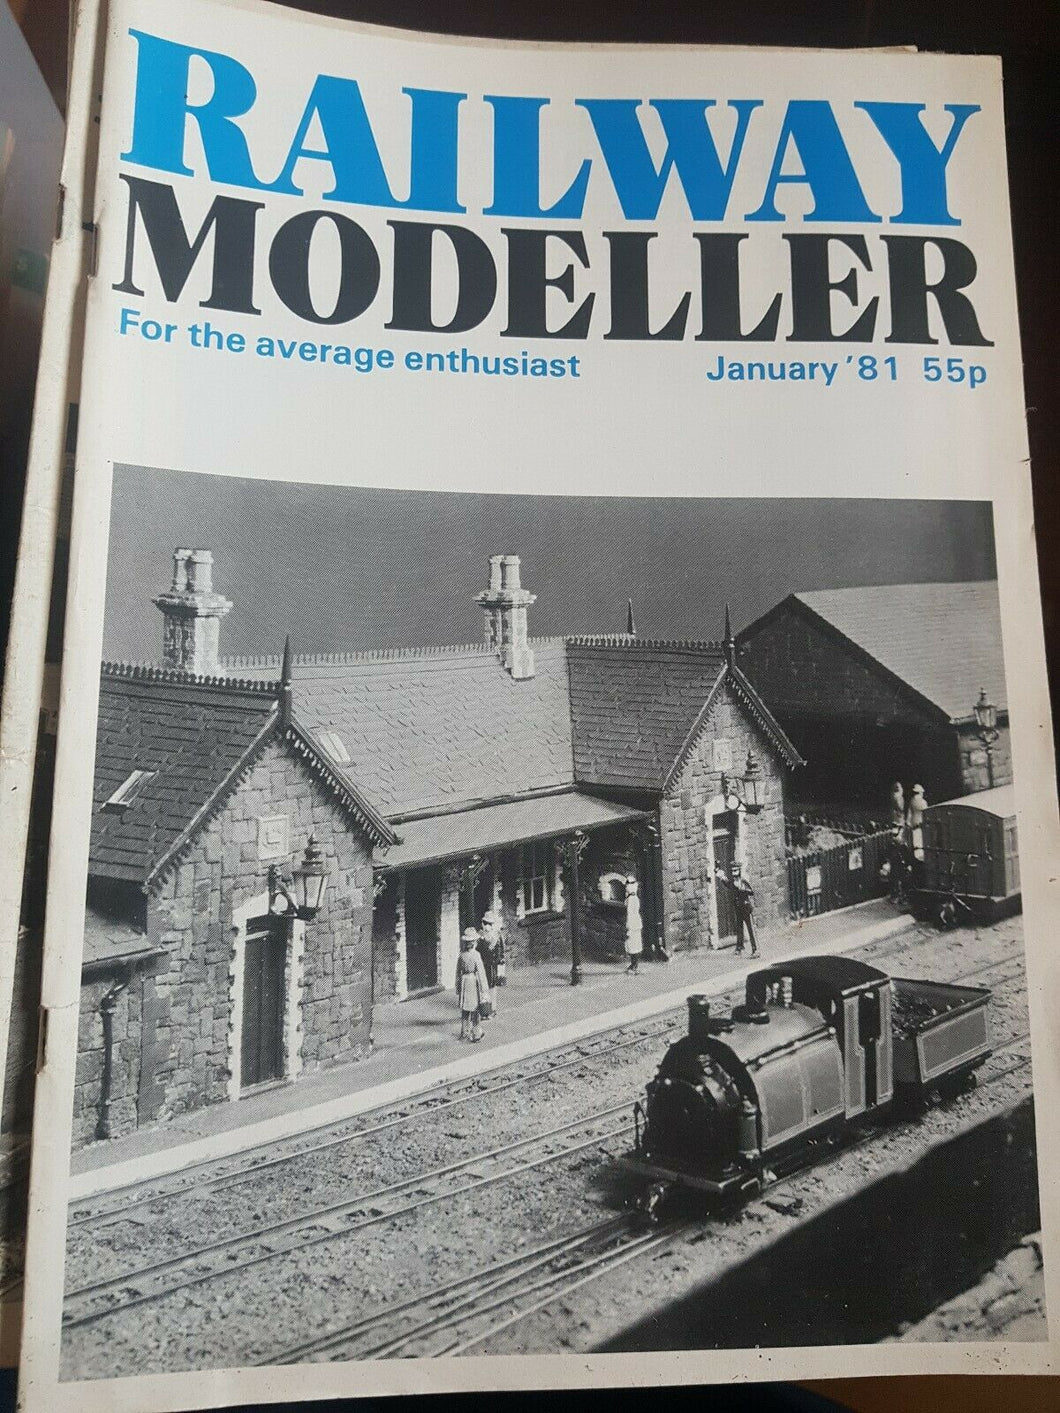 Railway modeller magazine January 1981